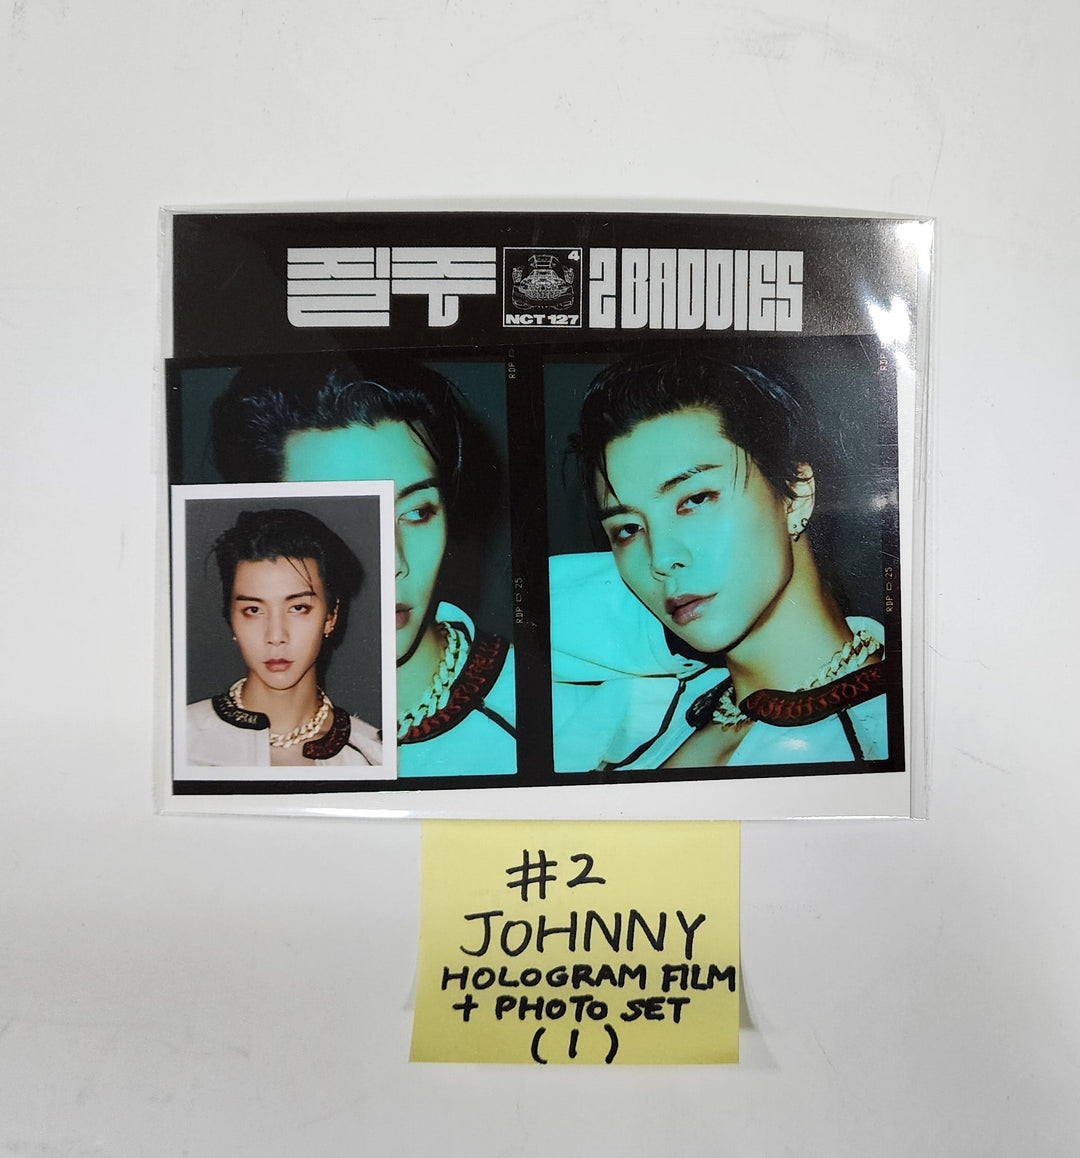 NCT 127 "질주 Street" POP-UP Store - Official MD [Sticker Set, 4x6 photo +polaroid set, A4 Photo] [Updated 12/15]